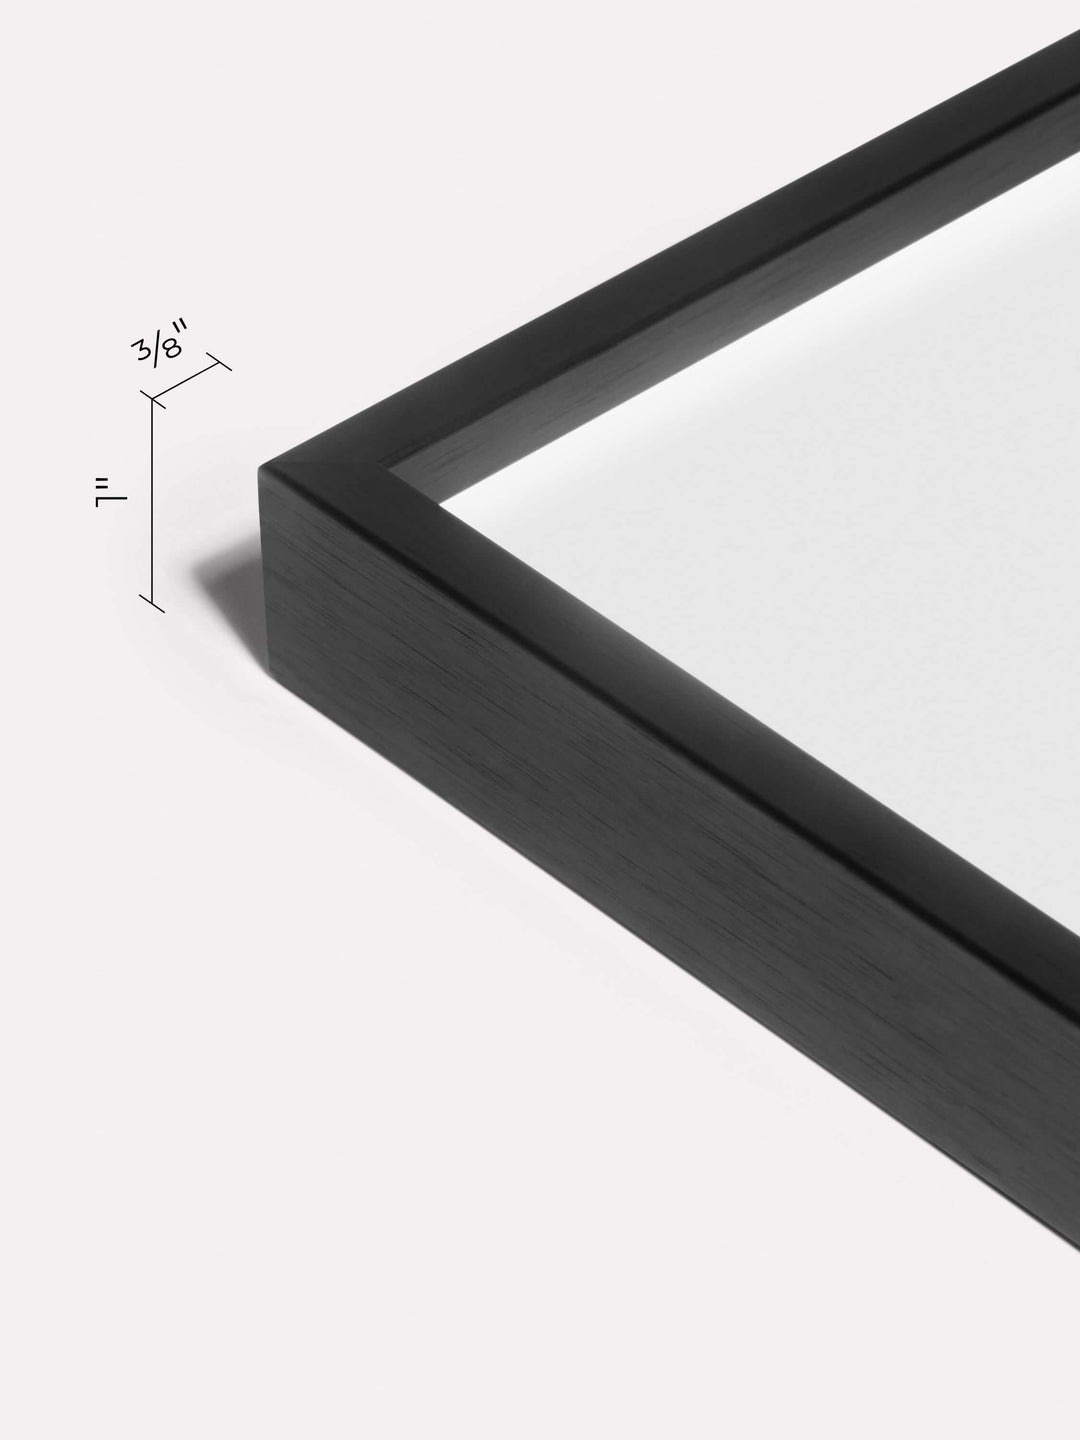 30x40-inch Thin Frame, Black - Close-up view